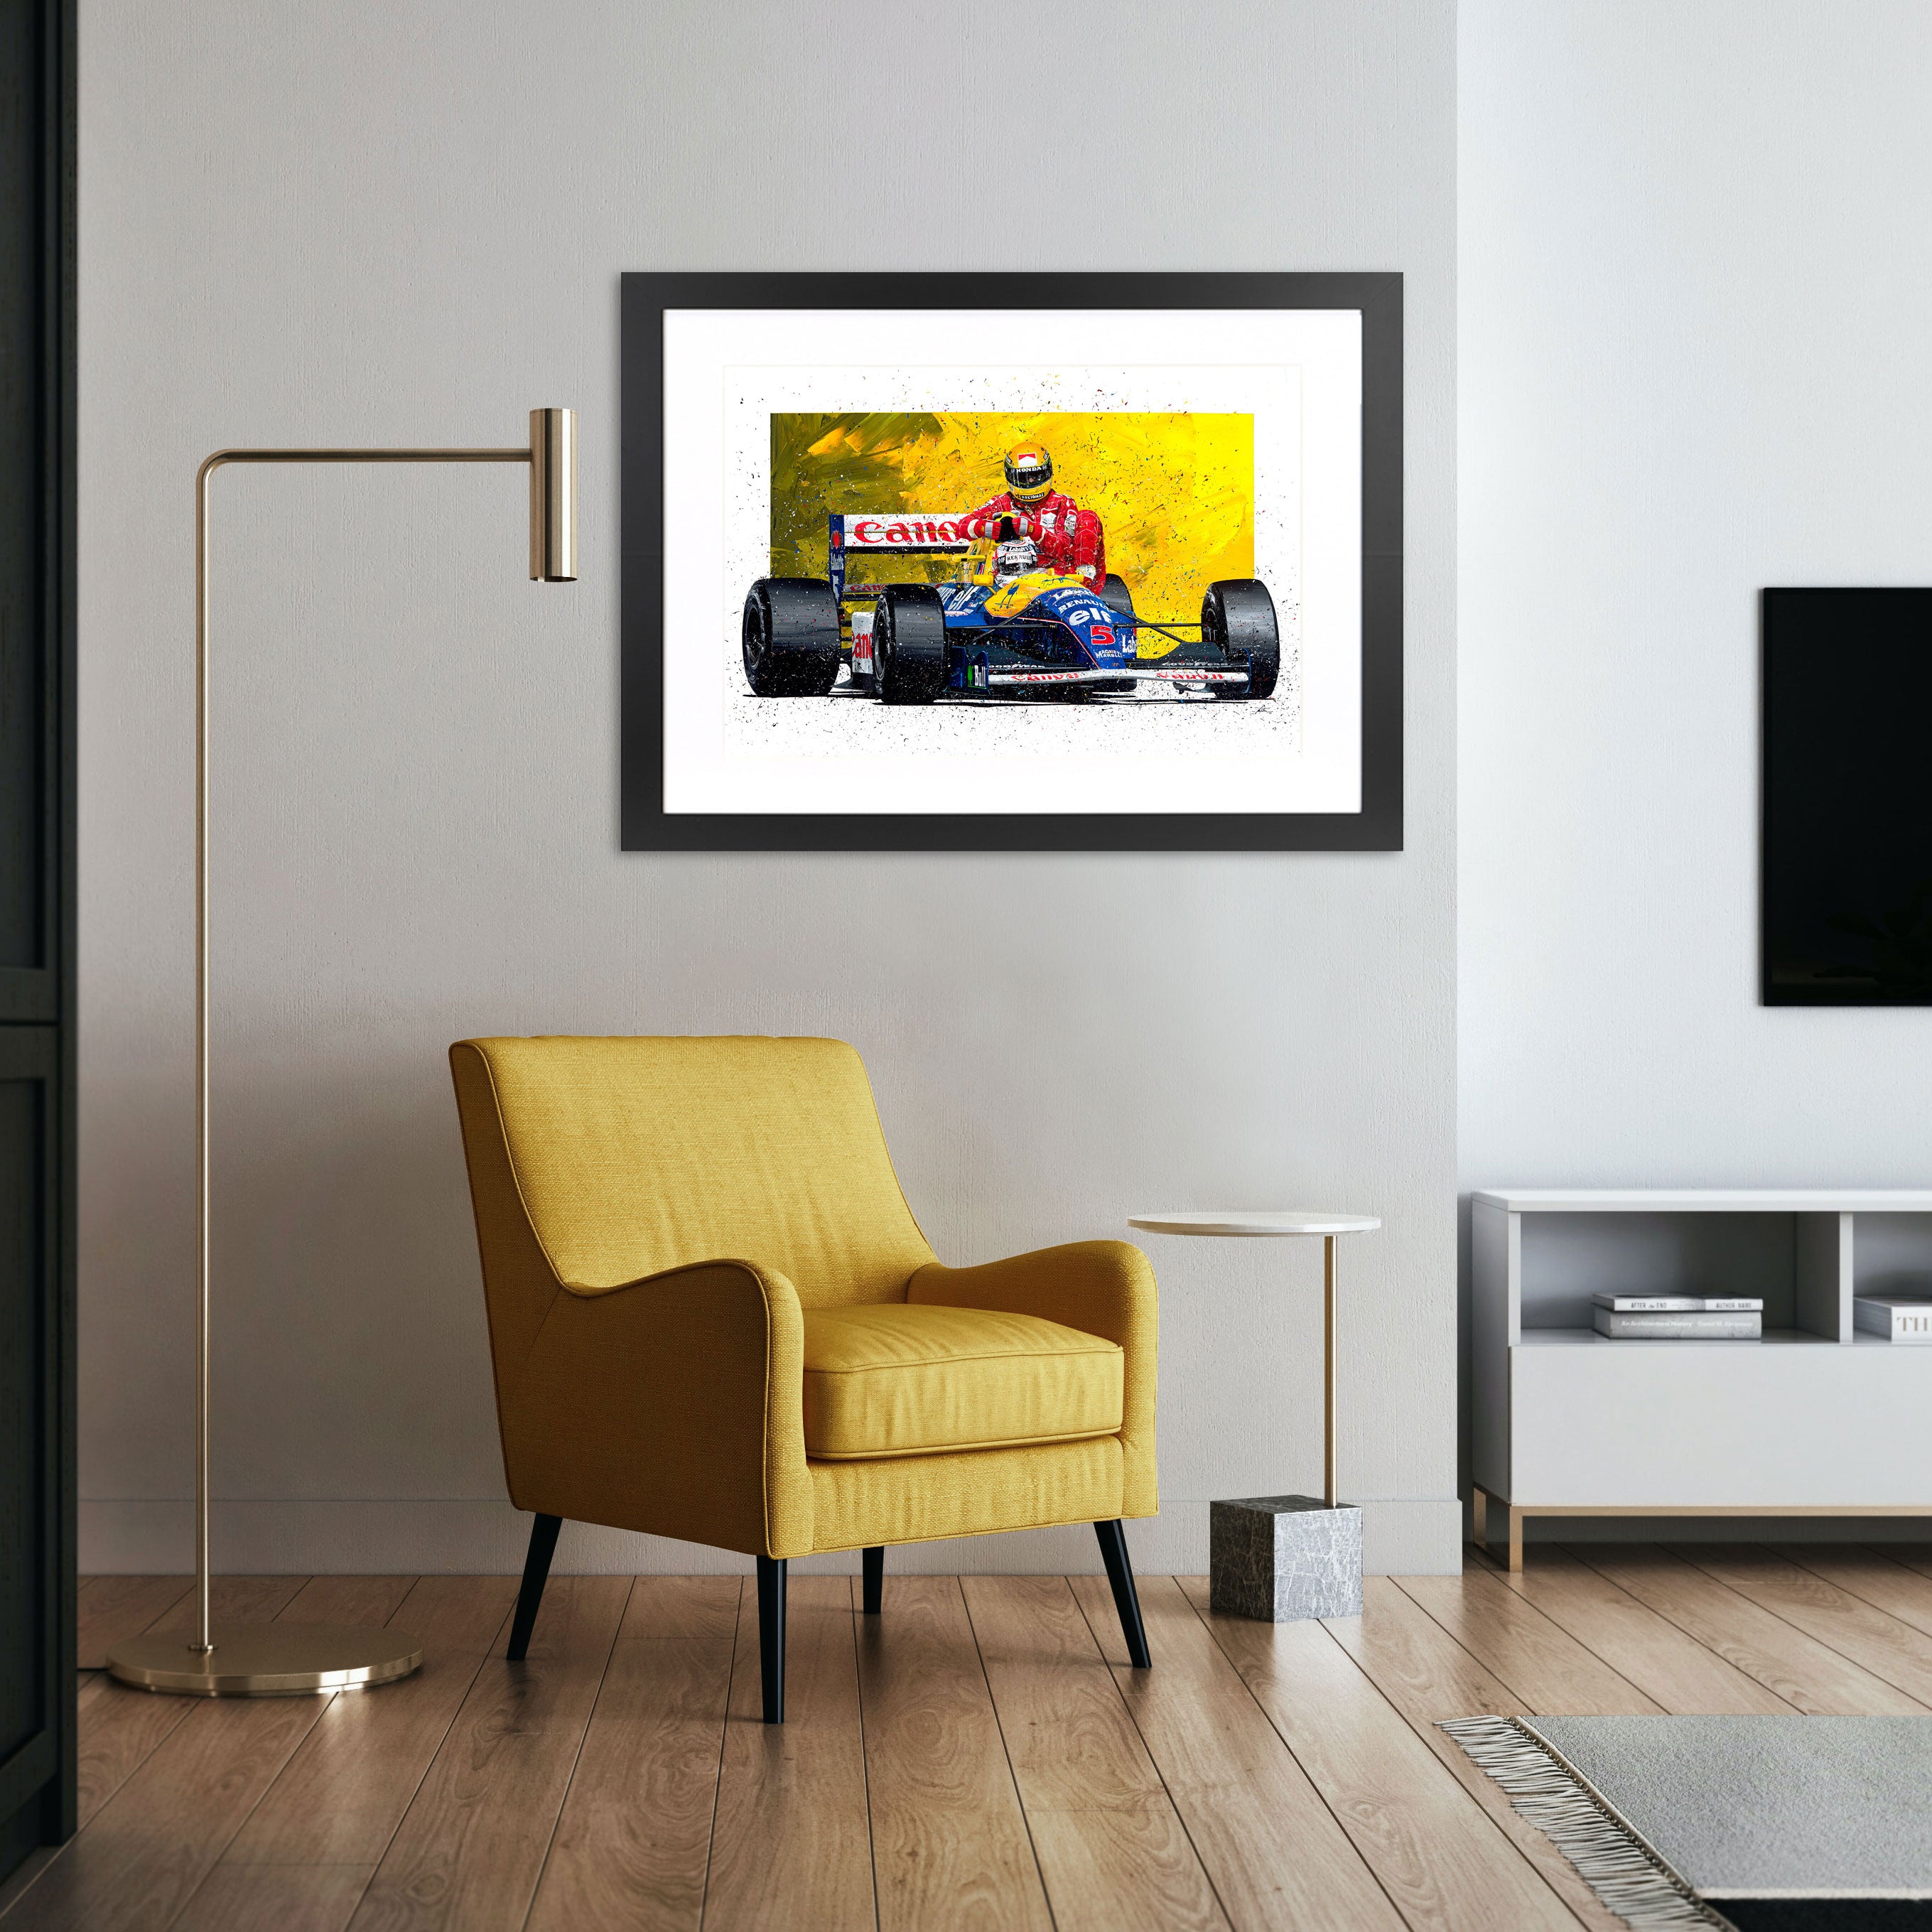 Nigel Mansell & Ayrton Senna 'Taxi' Giclee Print – David Johnson